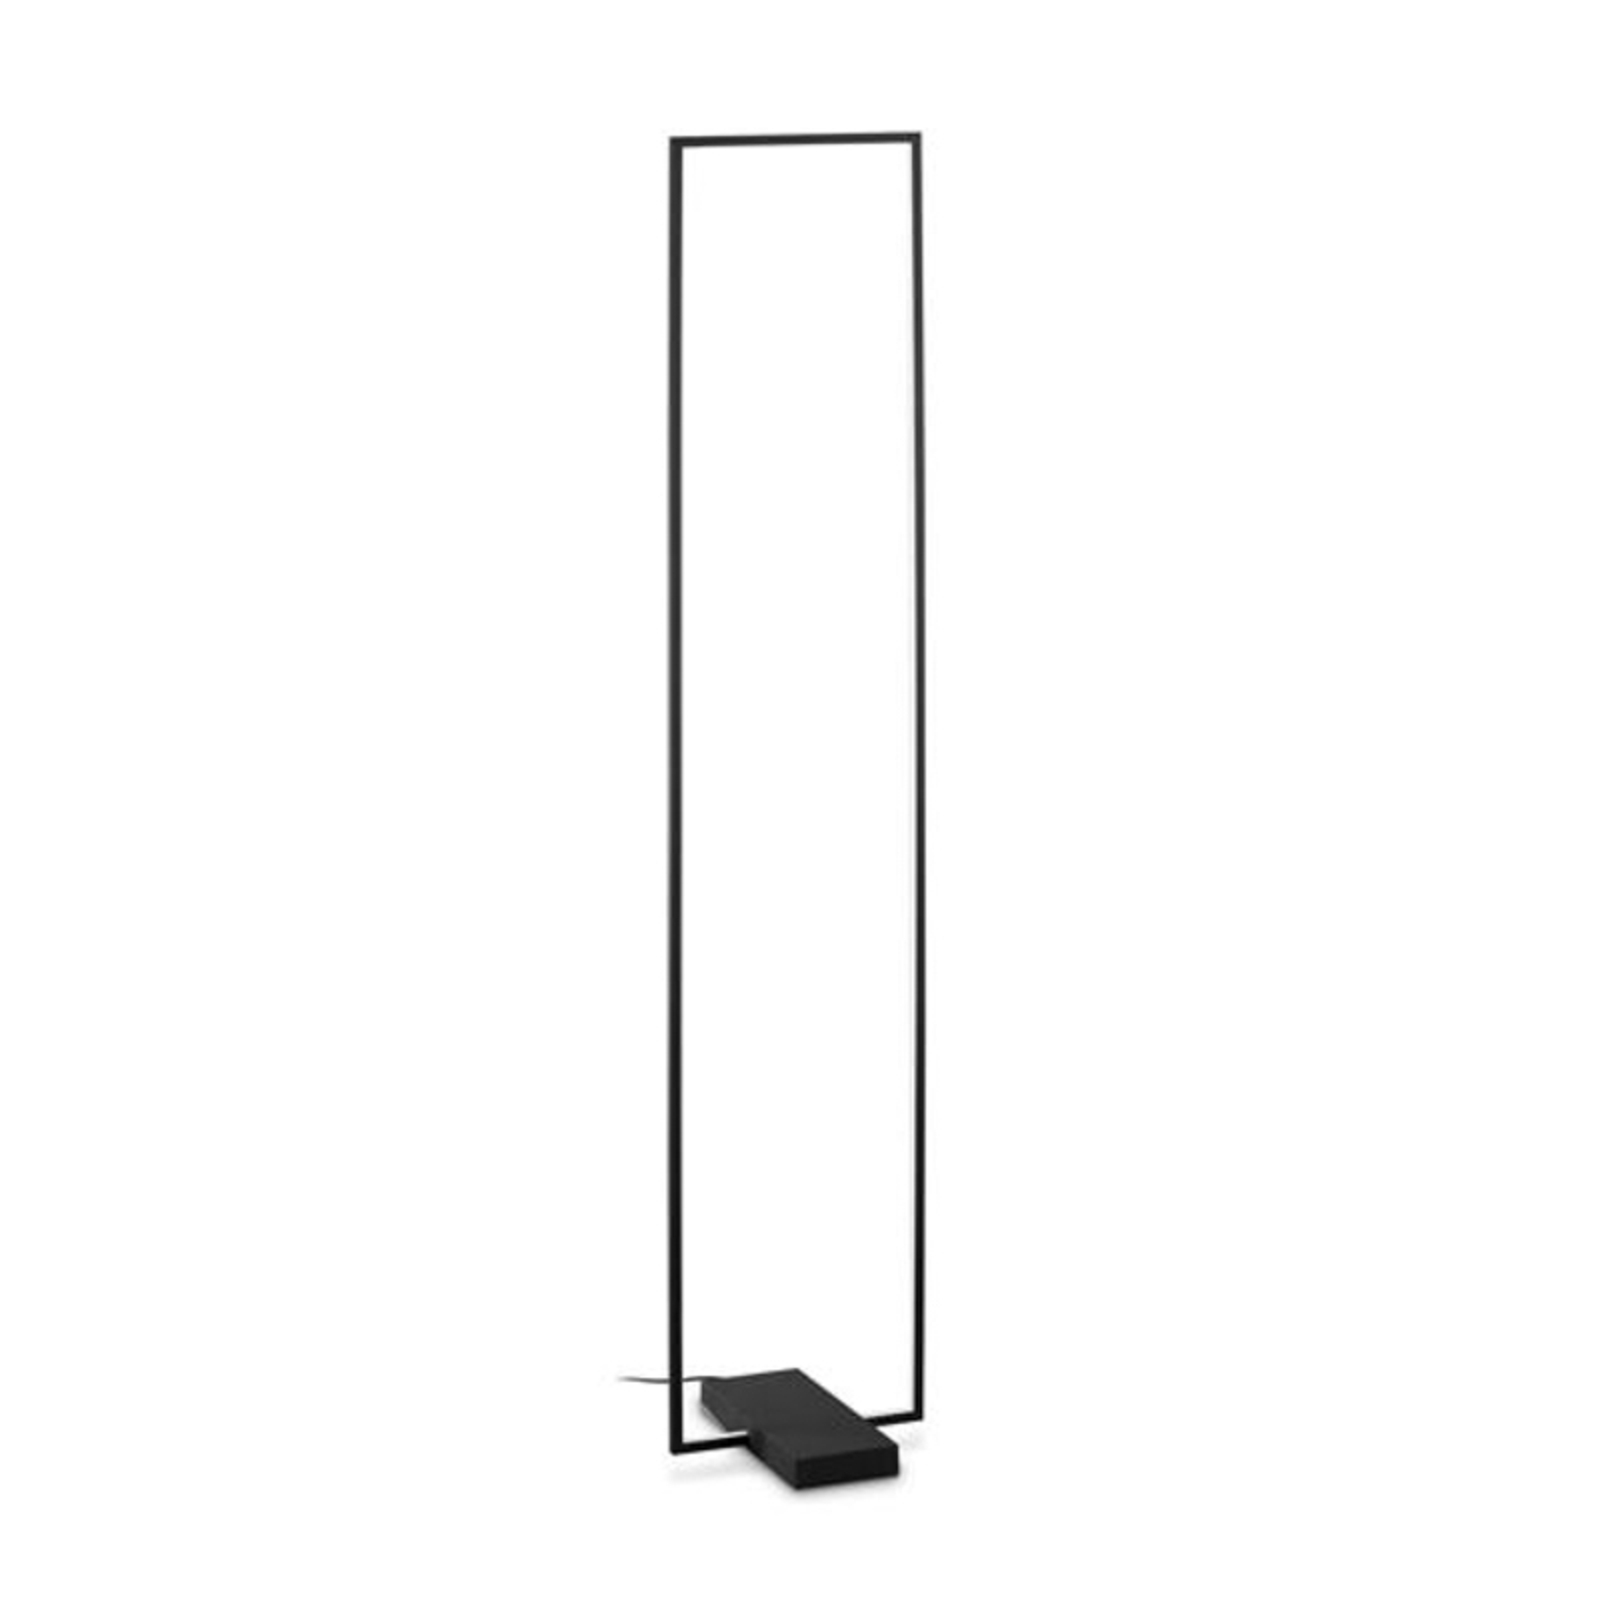 Ideal Lux LED vloerlamp Frame zwart metaal hoogte 150,5 cm